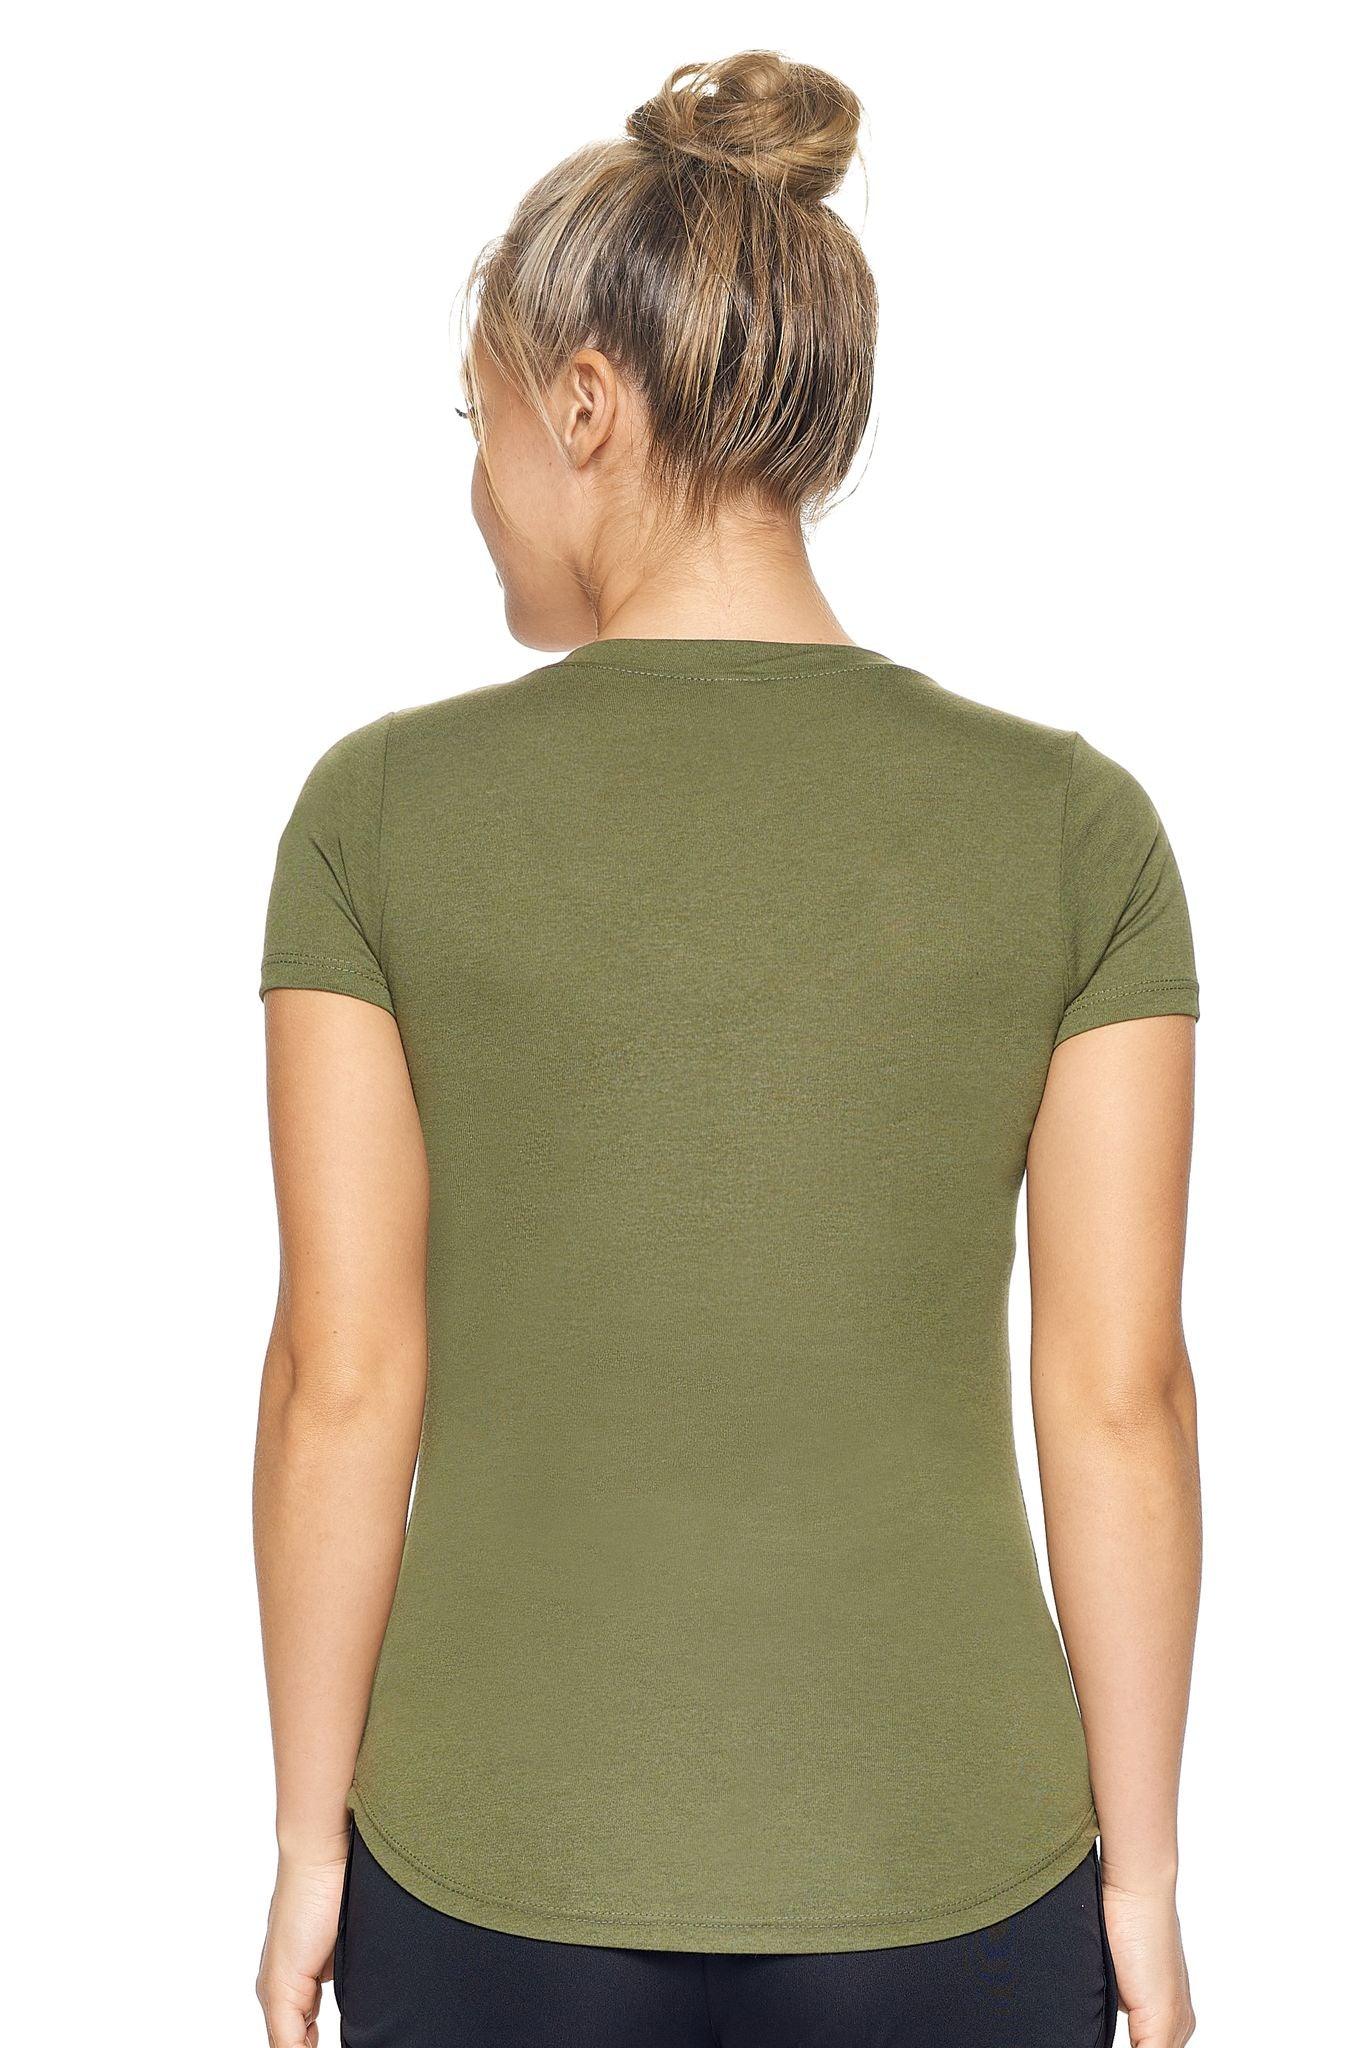 Women's Military Green TriTec™ Deep V-Neck Tee Image 3#military-green